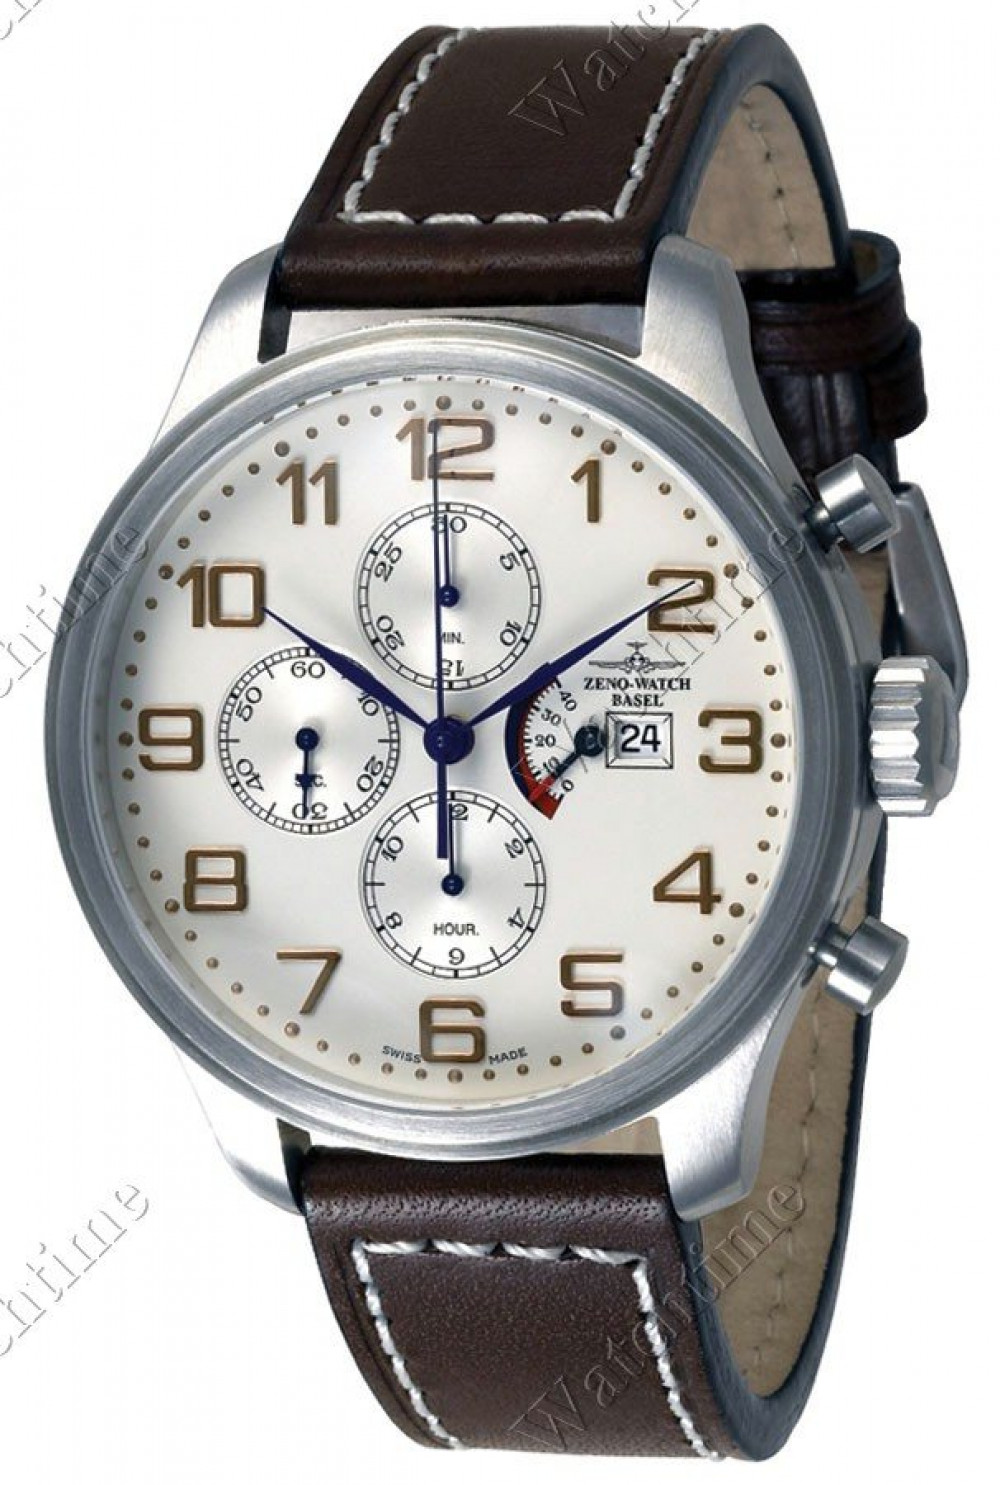 Zegarek firmy Zeno-Watch Basel, model Tri-Compax Classic